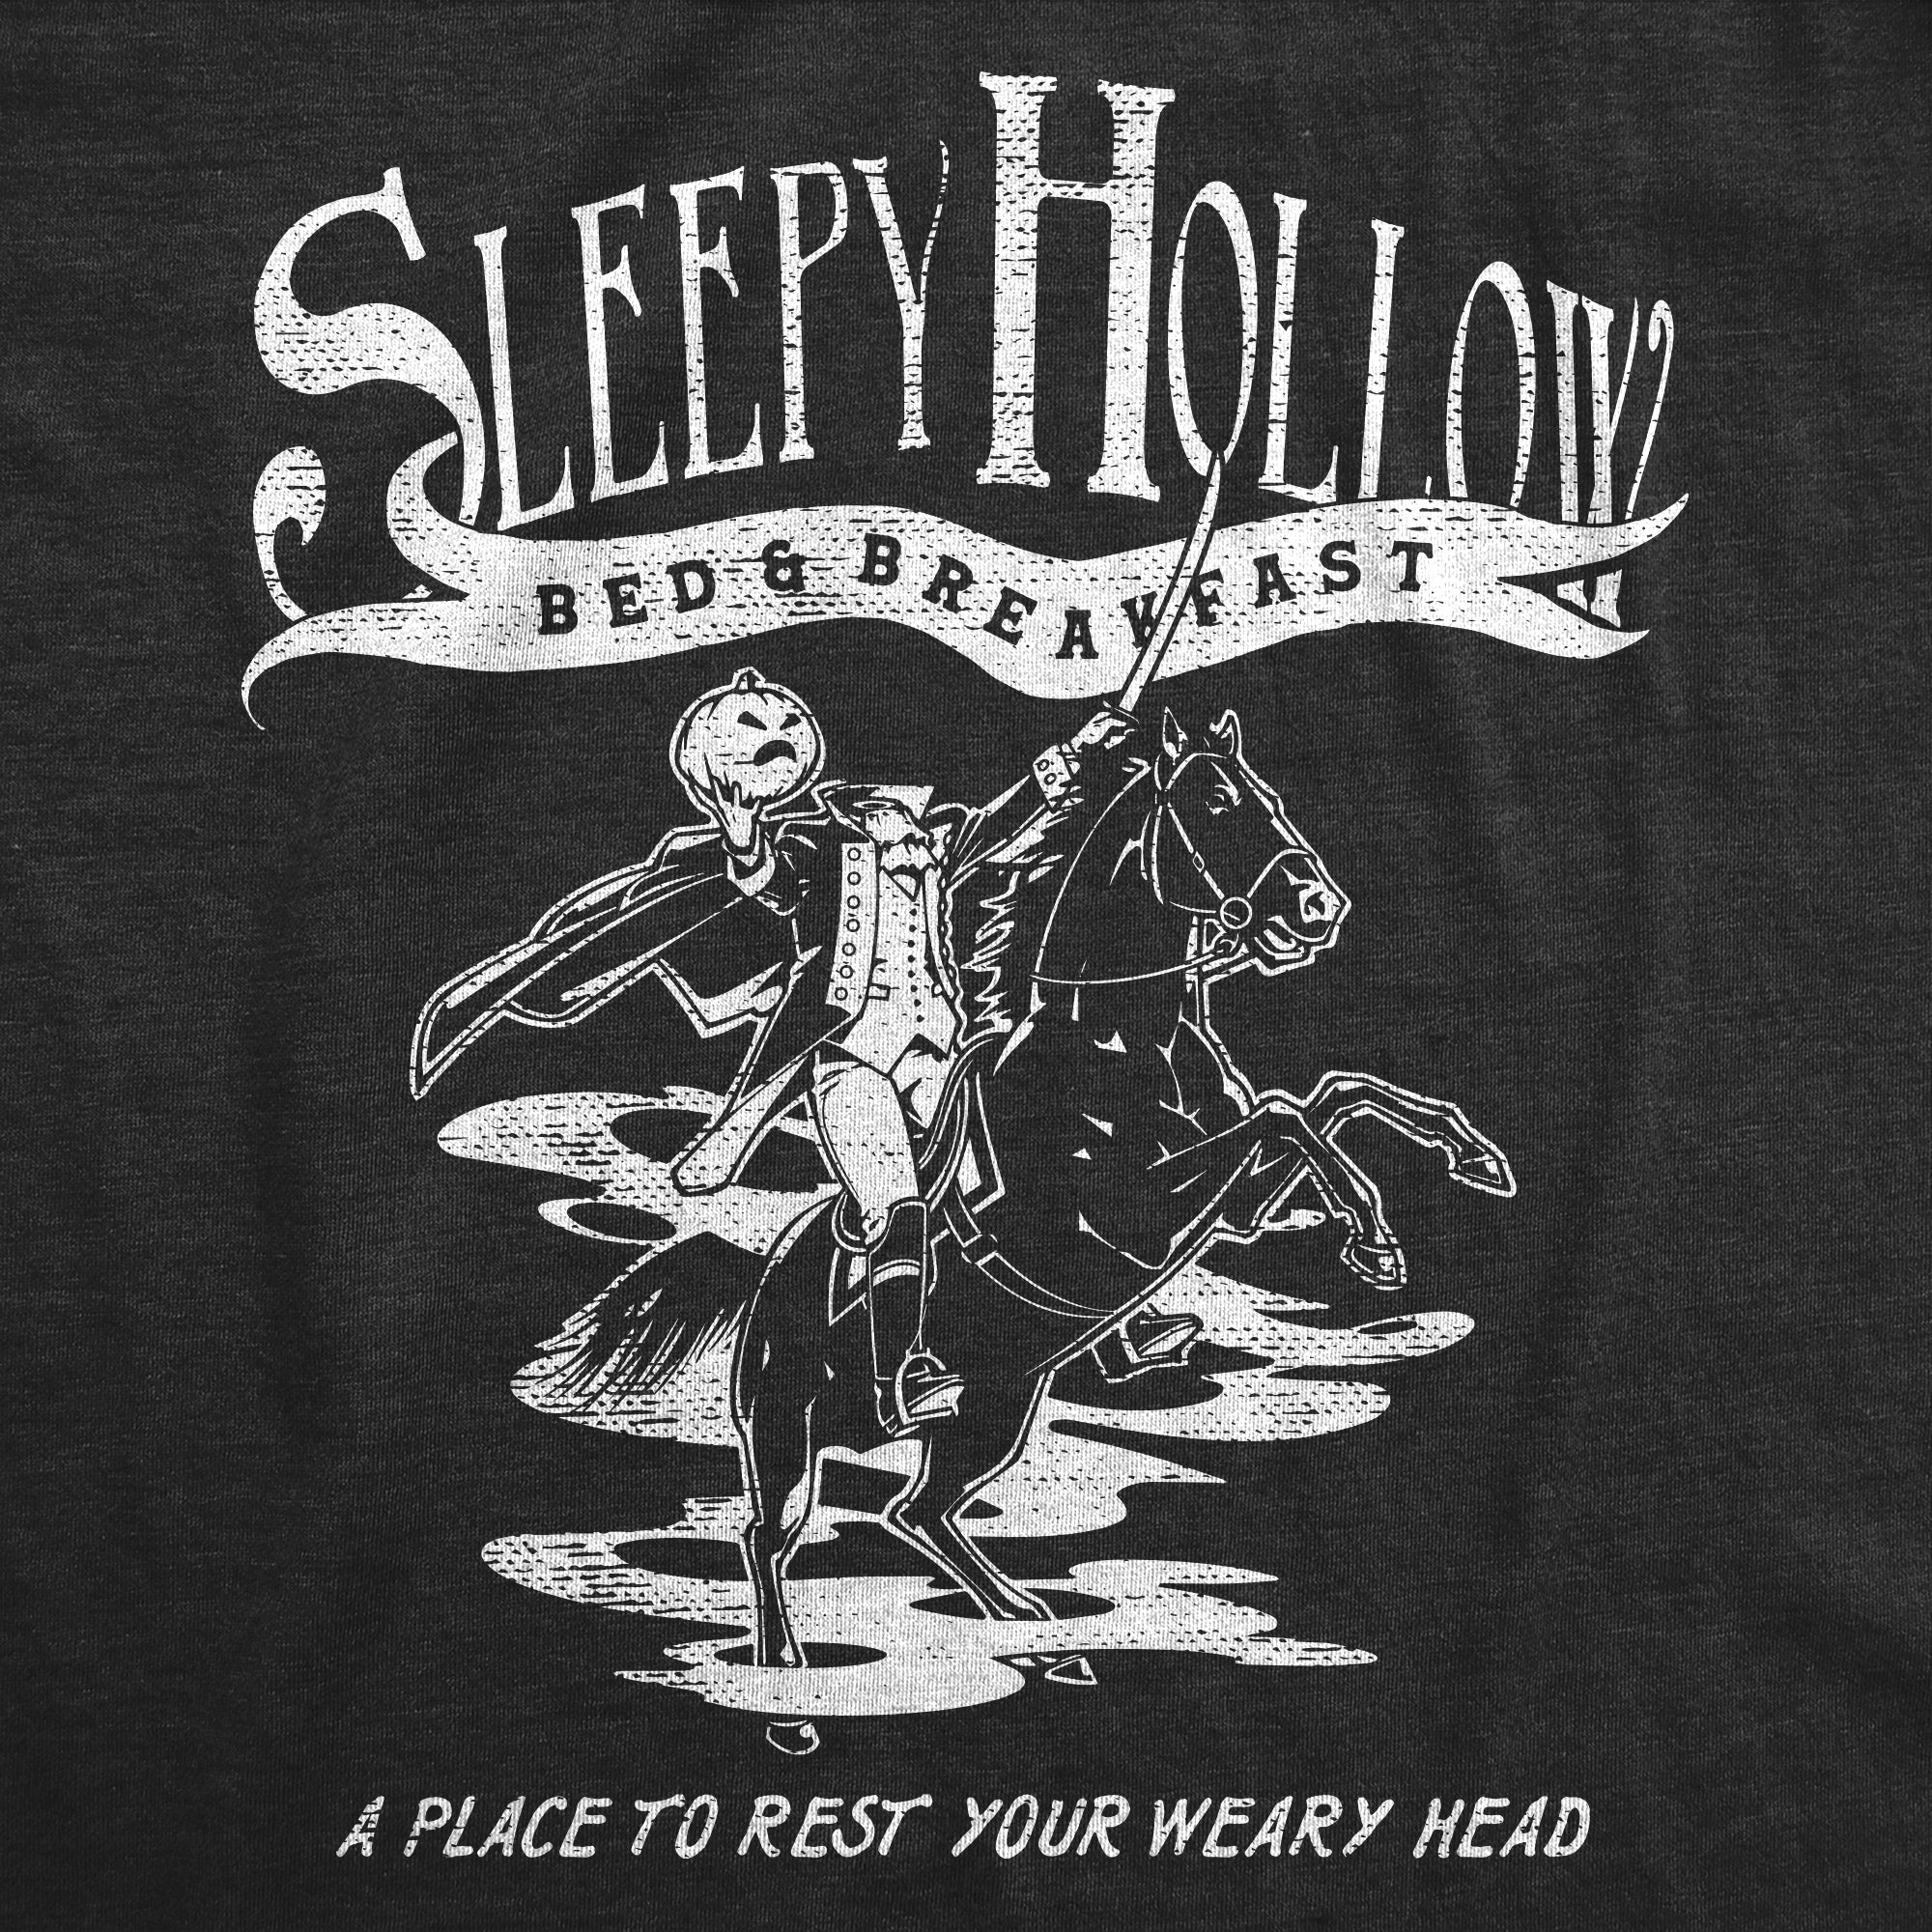 Funny Heather Black - SLEEPYHOLLOW Sleepy Hollow Bed And Breakfast Mens T Shirt Nerdy Halloween Sarcastic Tee